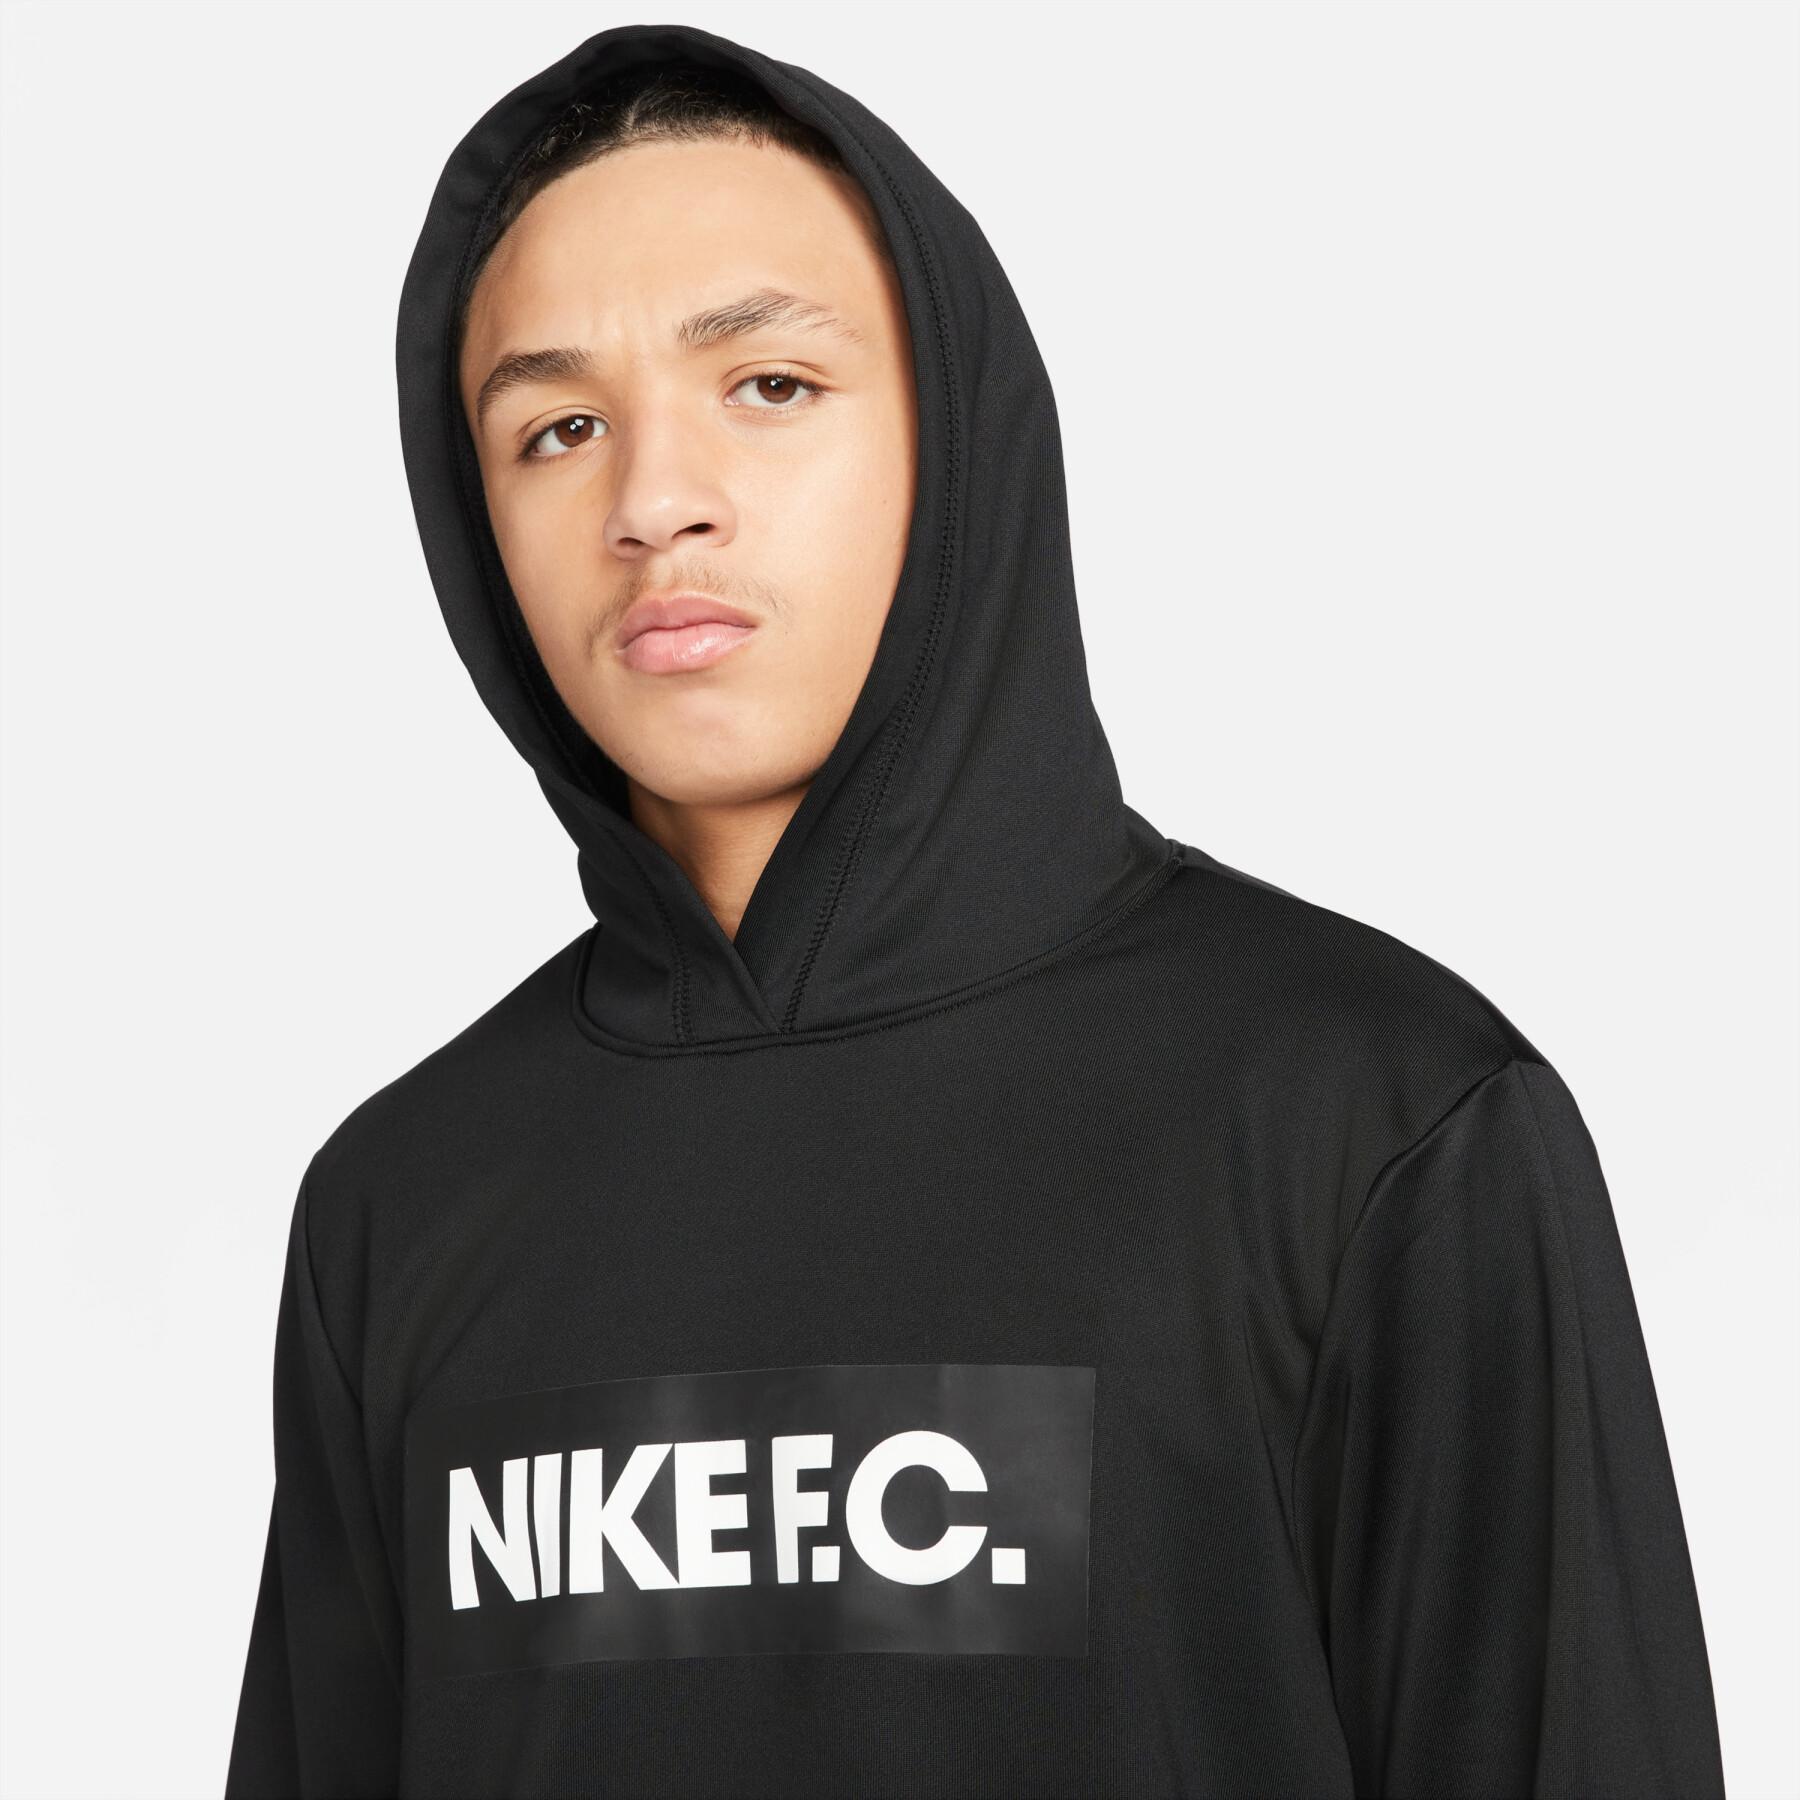 Bluza z kapturem Nike F.C.